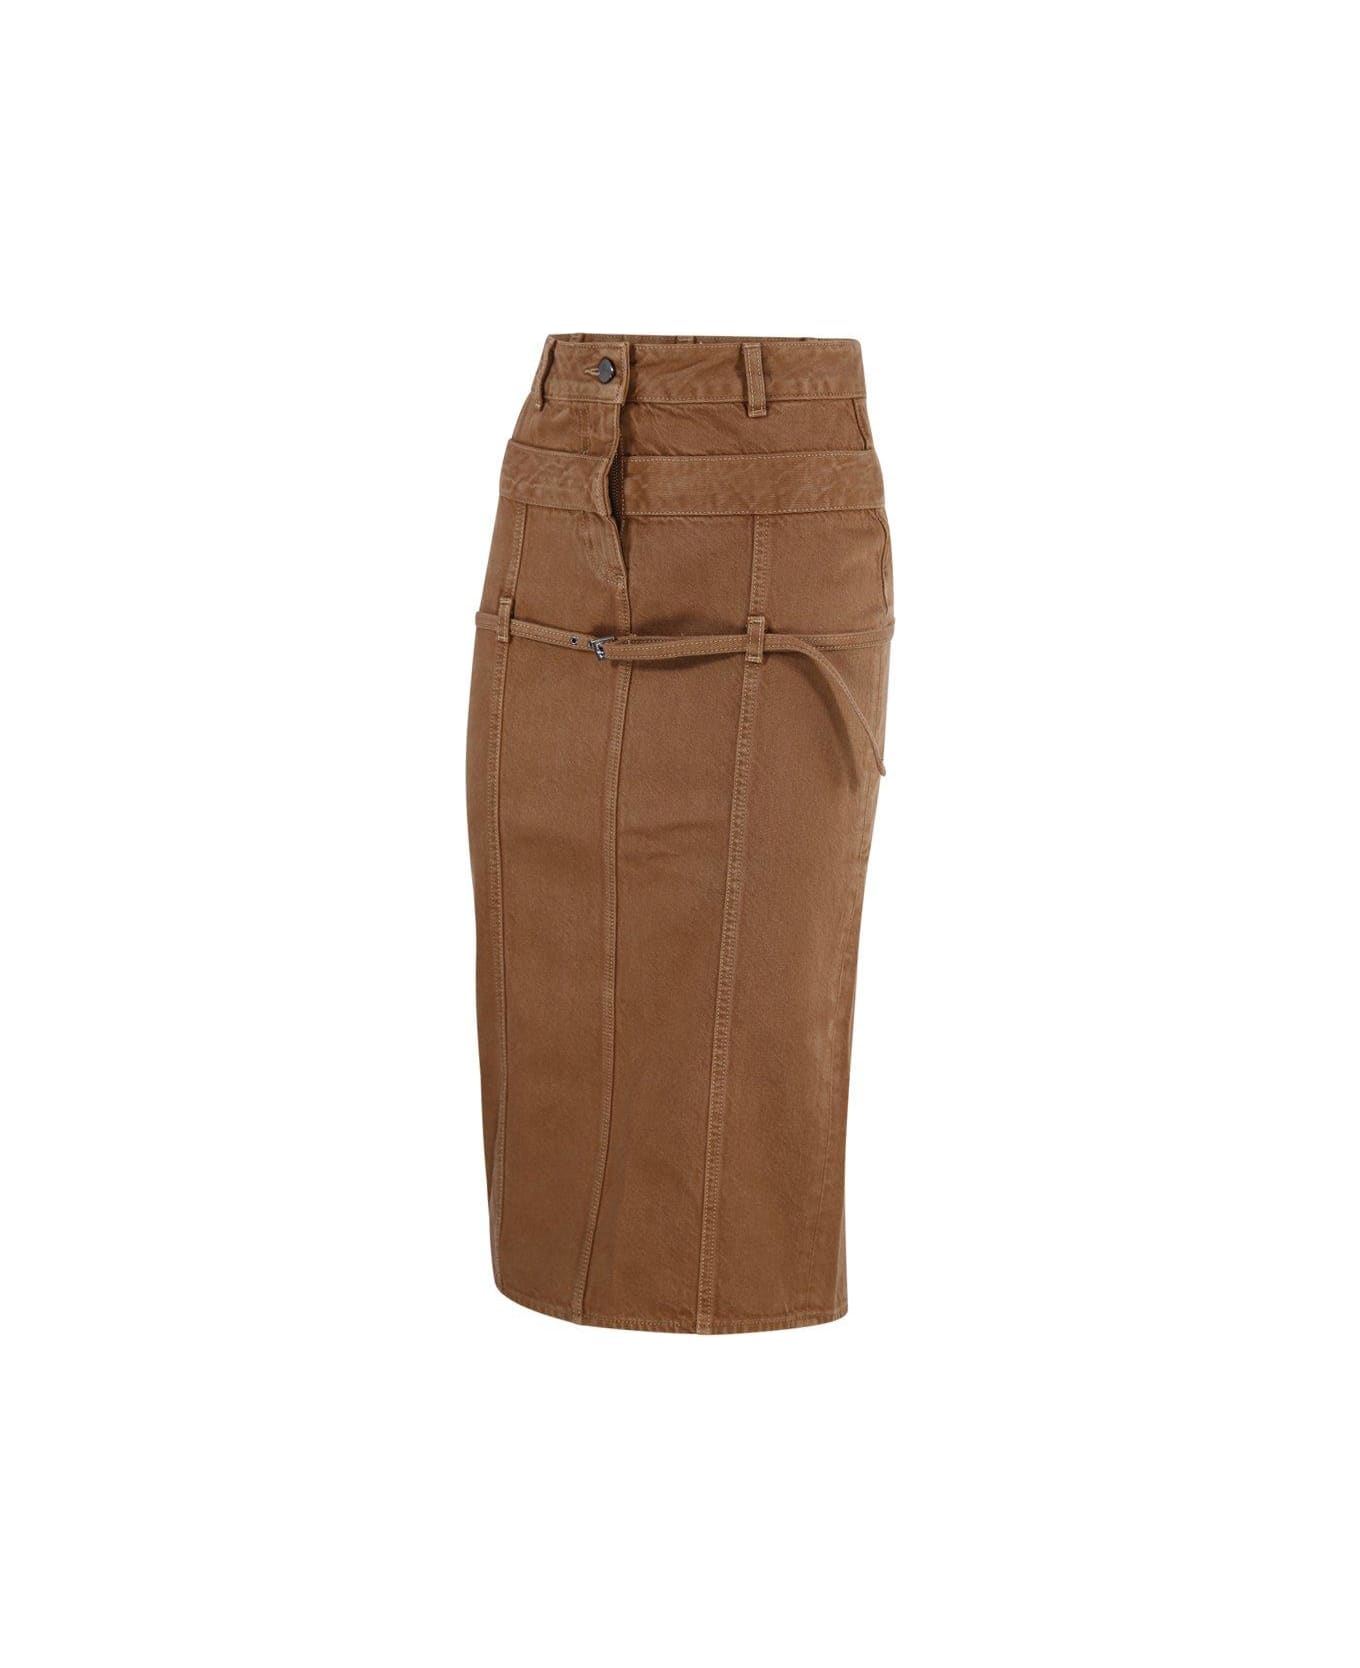 Jacquemus Denim Back-slit Skirt - A Camel Beige スカート